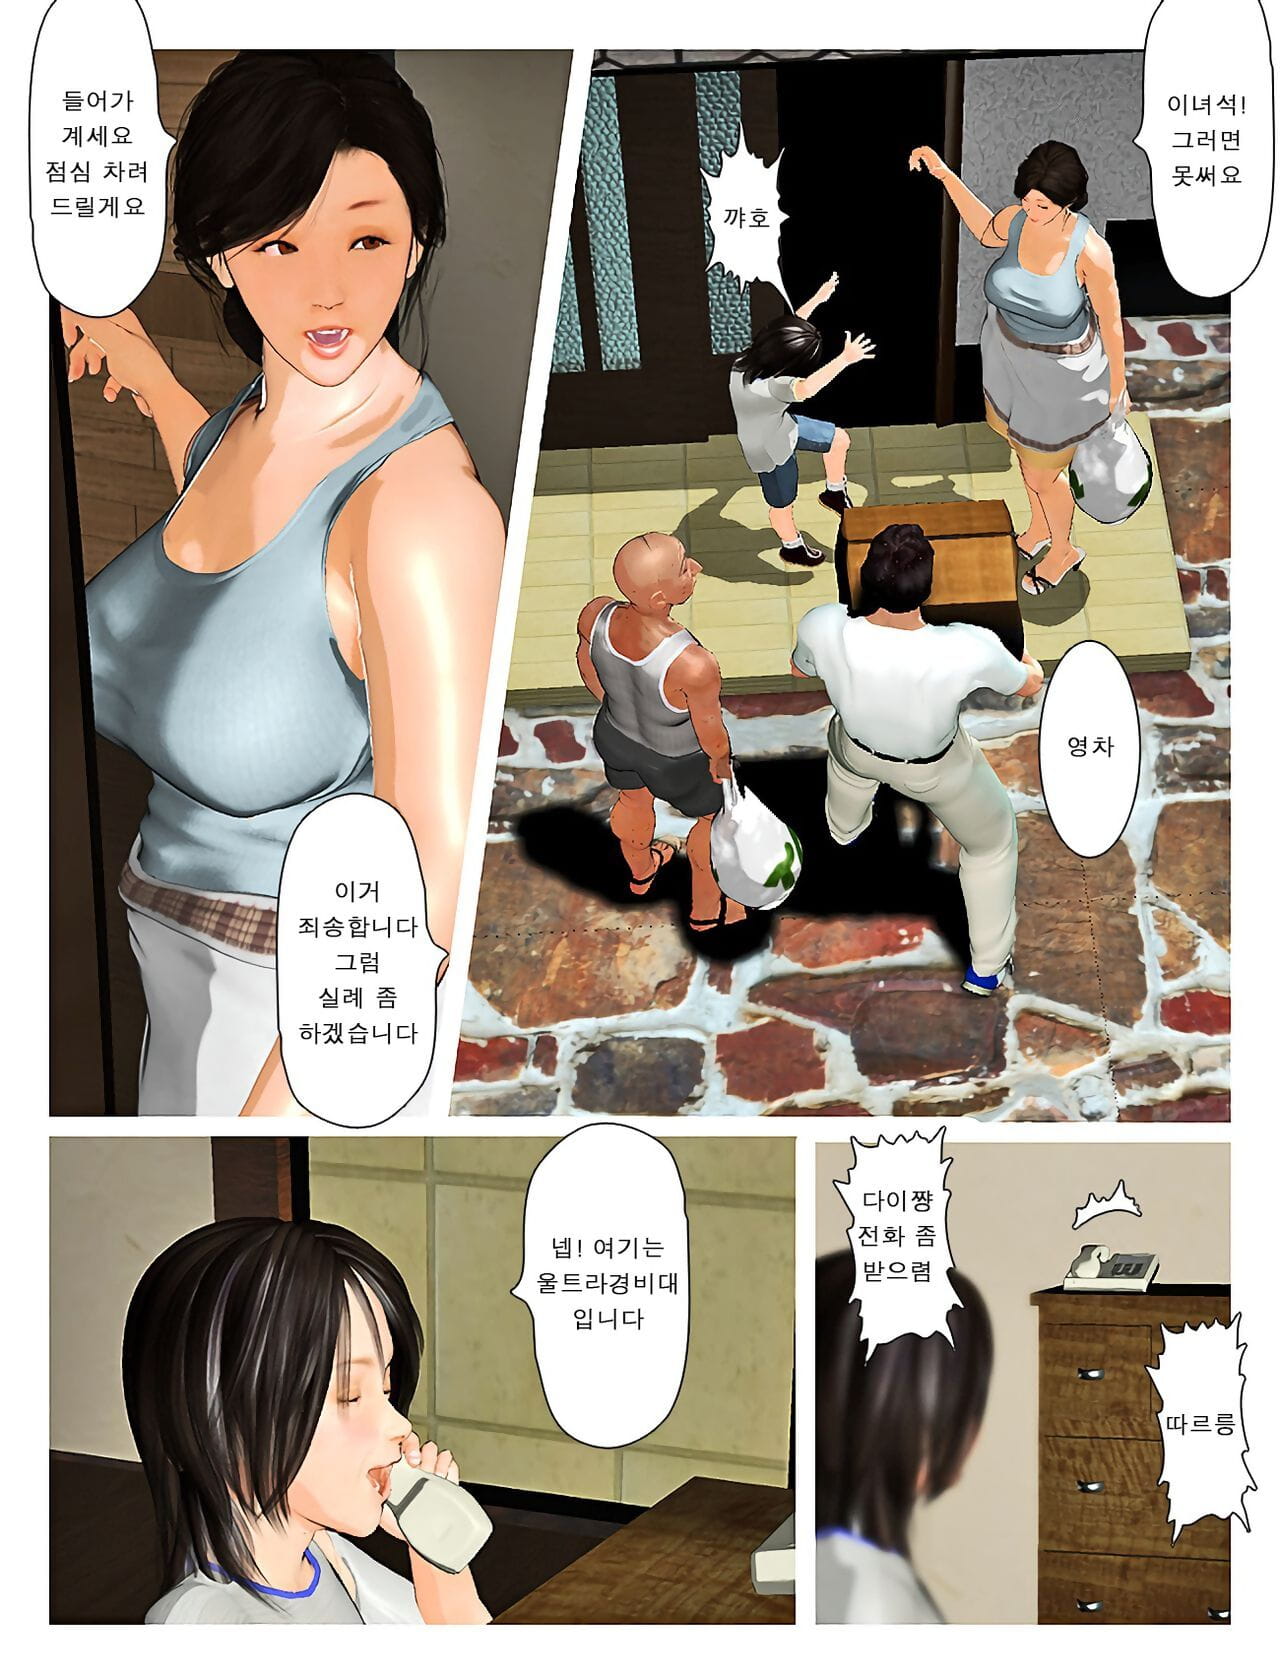 Kyou không misako san 2019:3 오늘의 미사코씨 2019:3 page 1